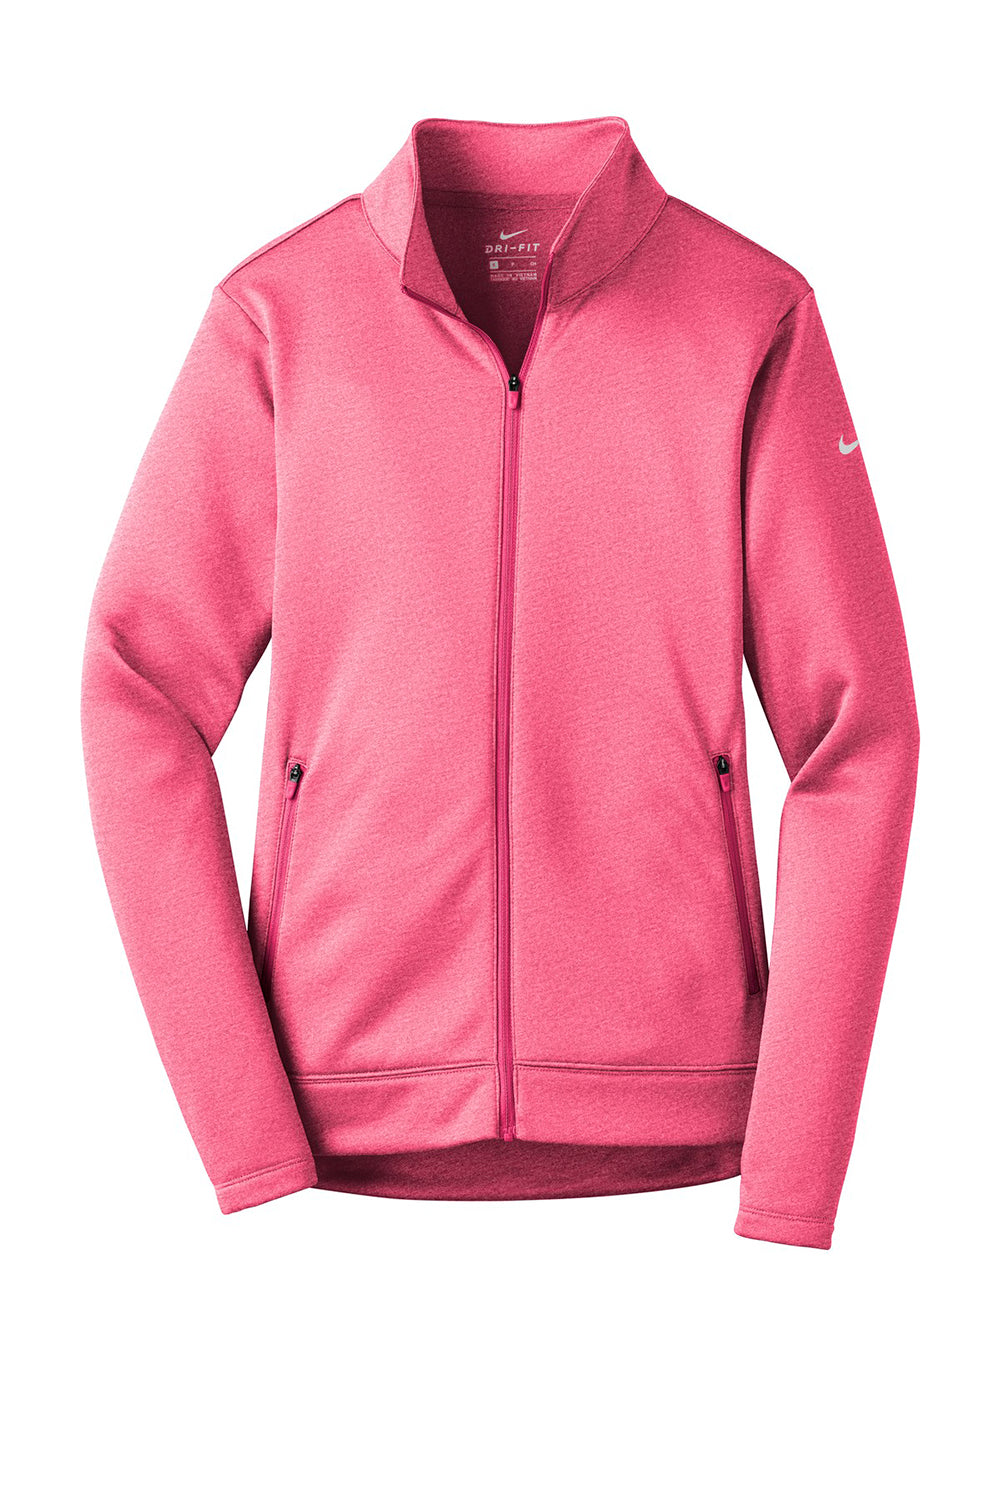 Nike NKAH6260 Womens Therma-Fit Moisture Wicking Fleece Full Zip Sweatshirt Heather Vivid Pink Flat Front